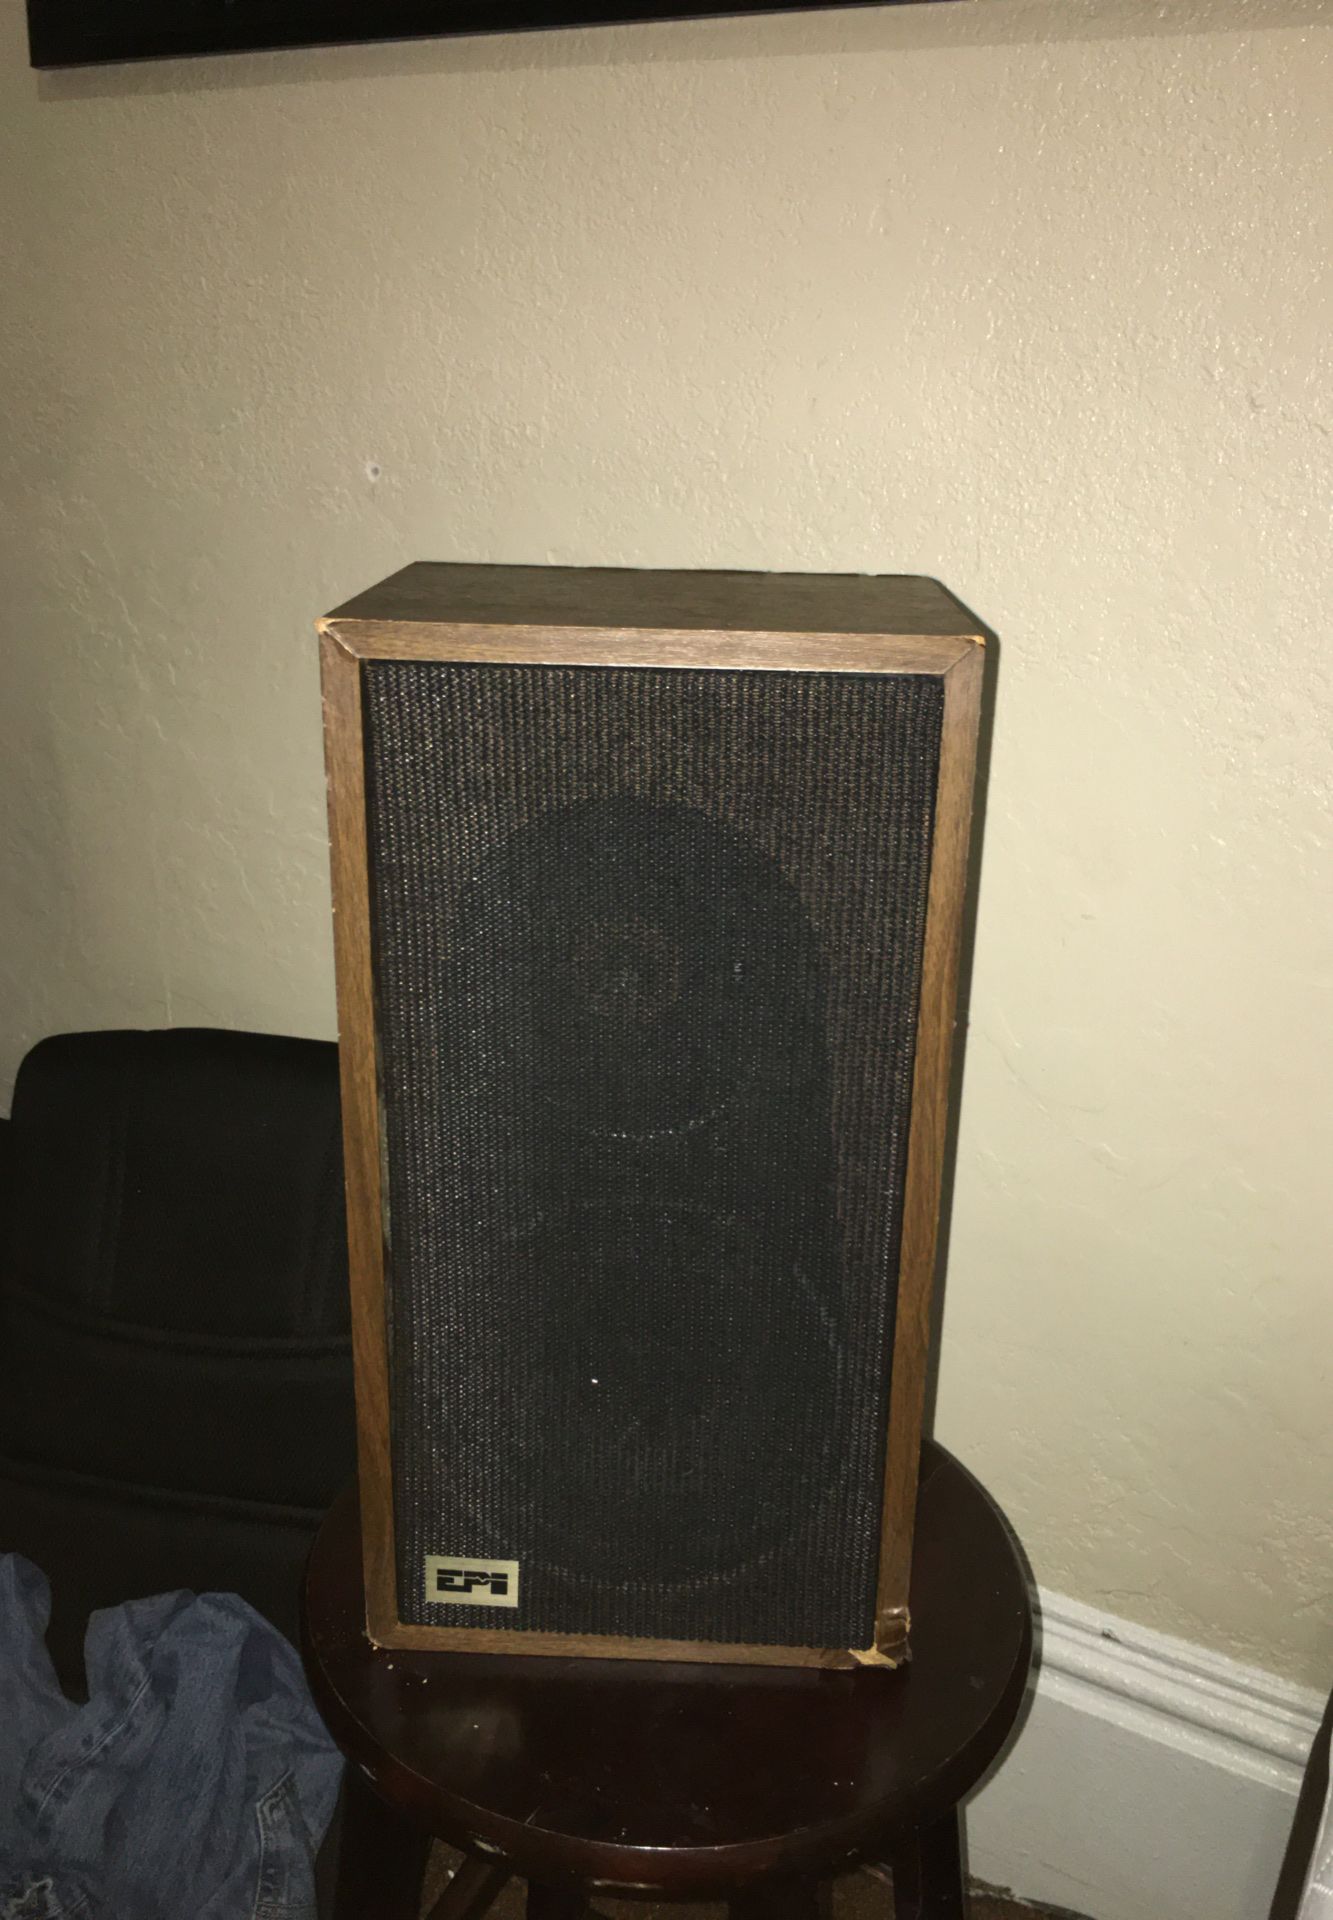 Epi loud speakers